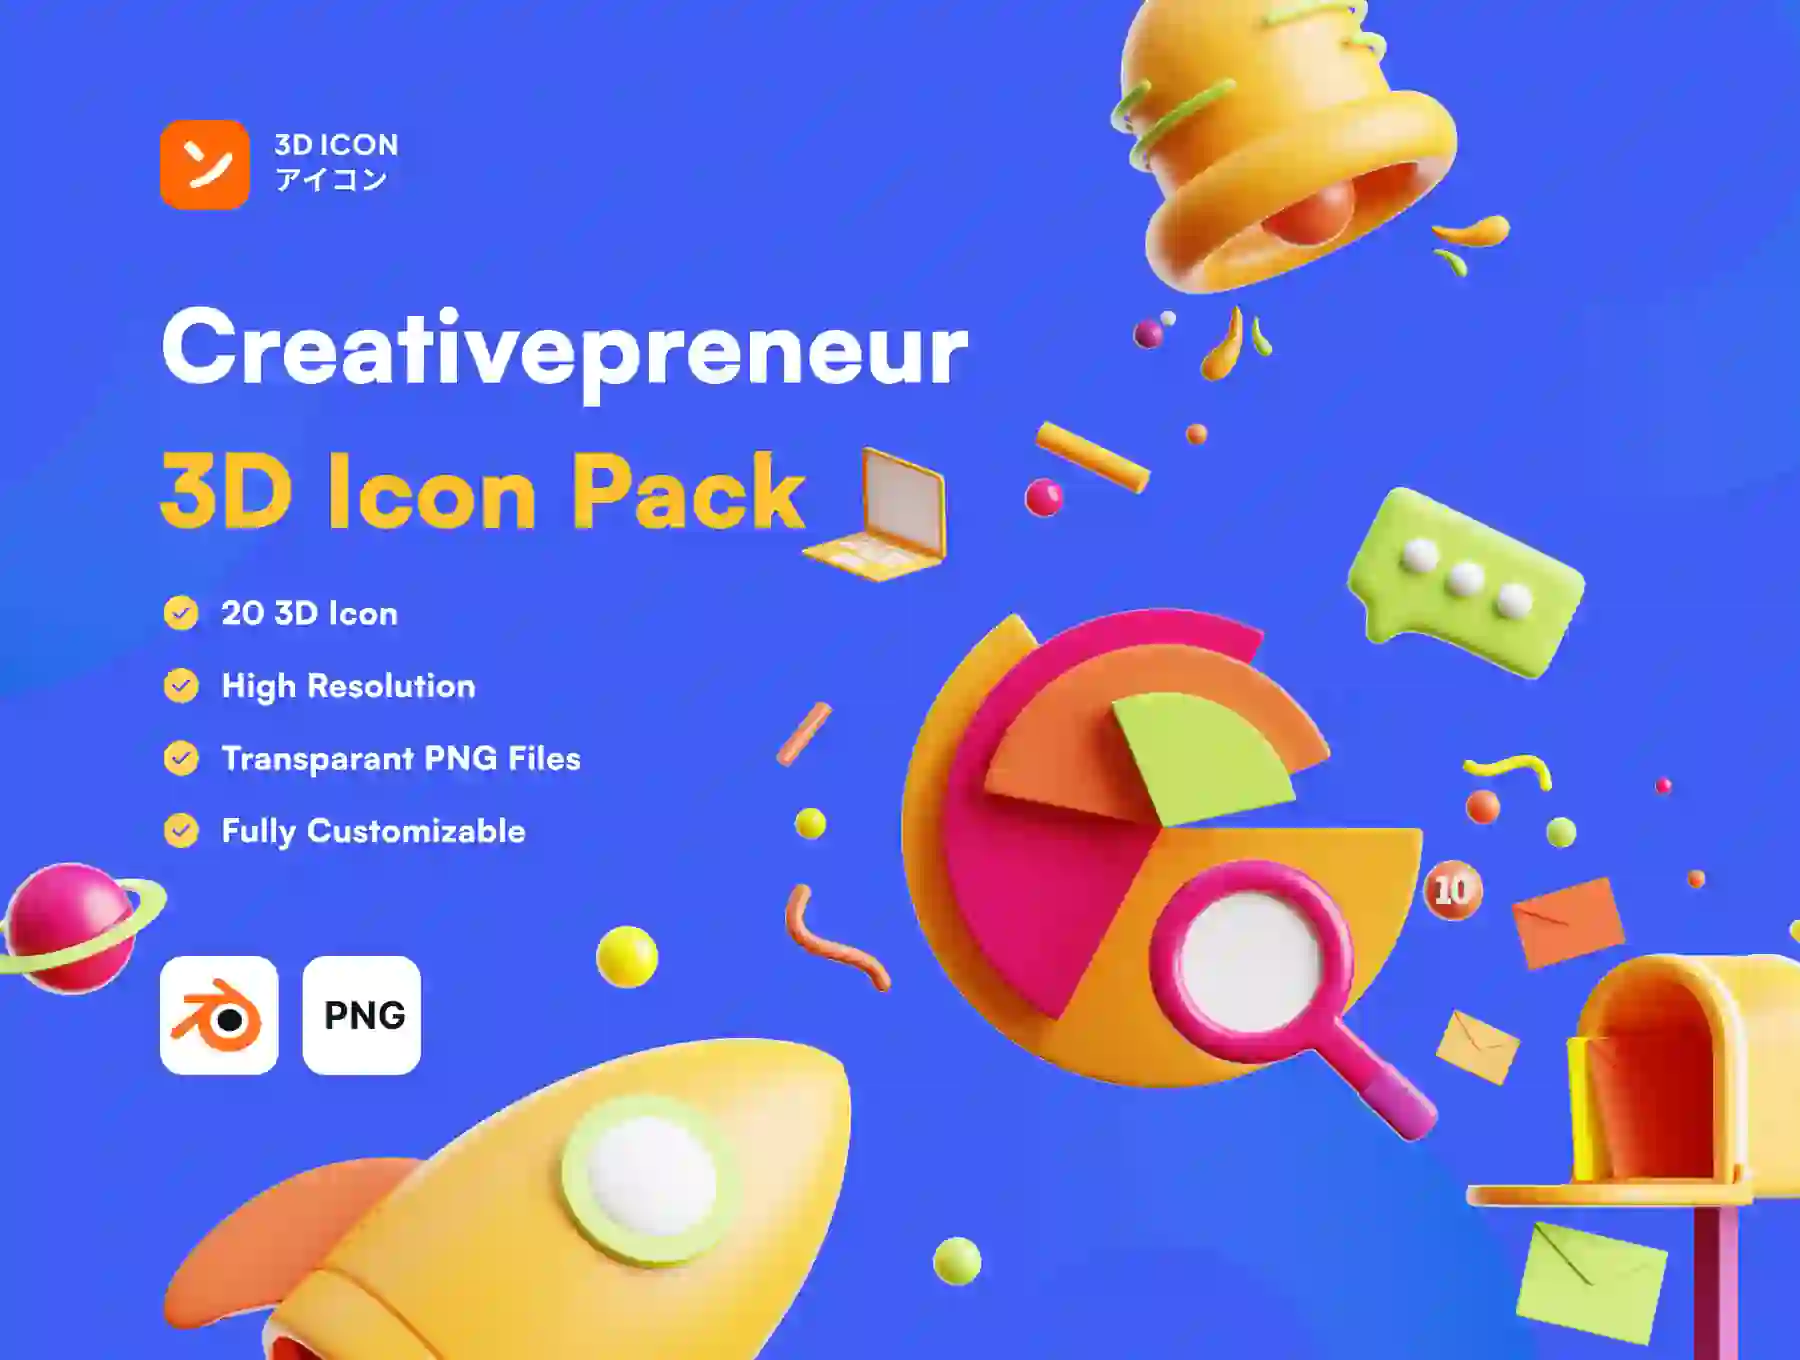 Creativepreneur 3D Icon Pack